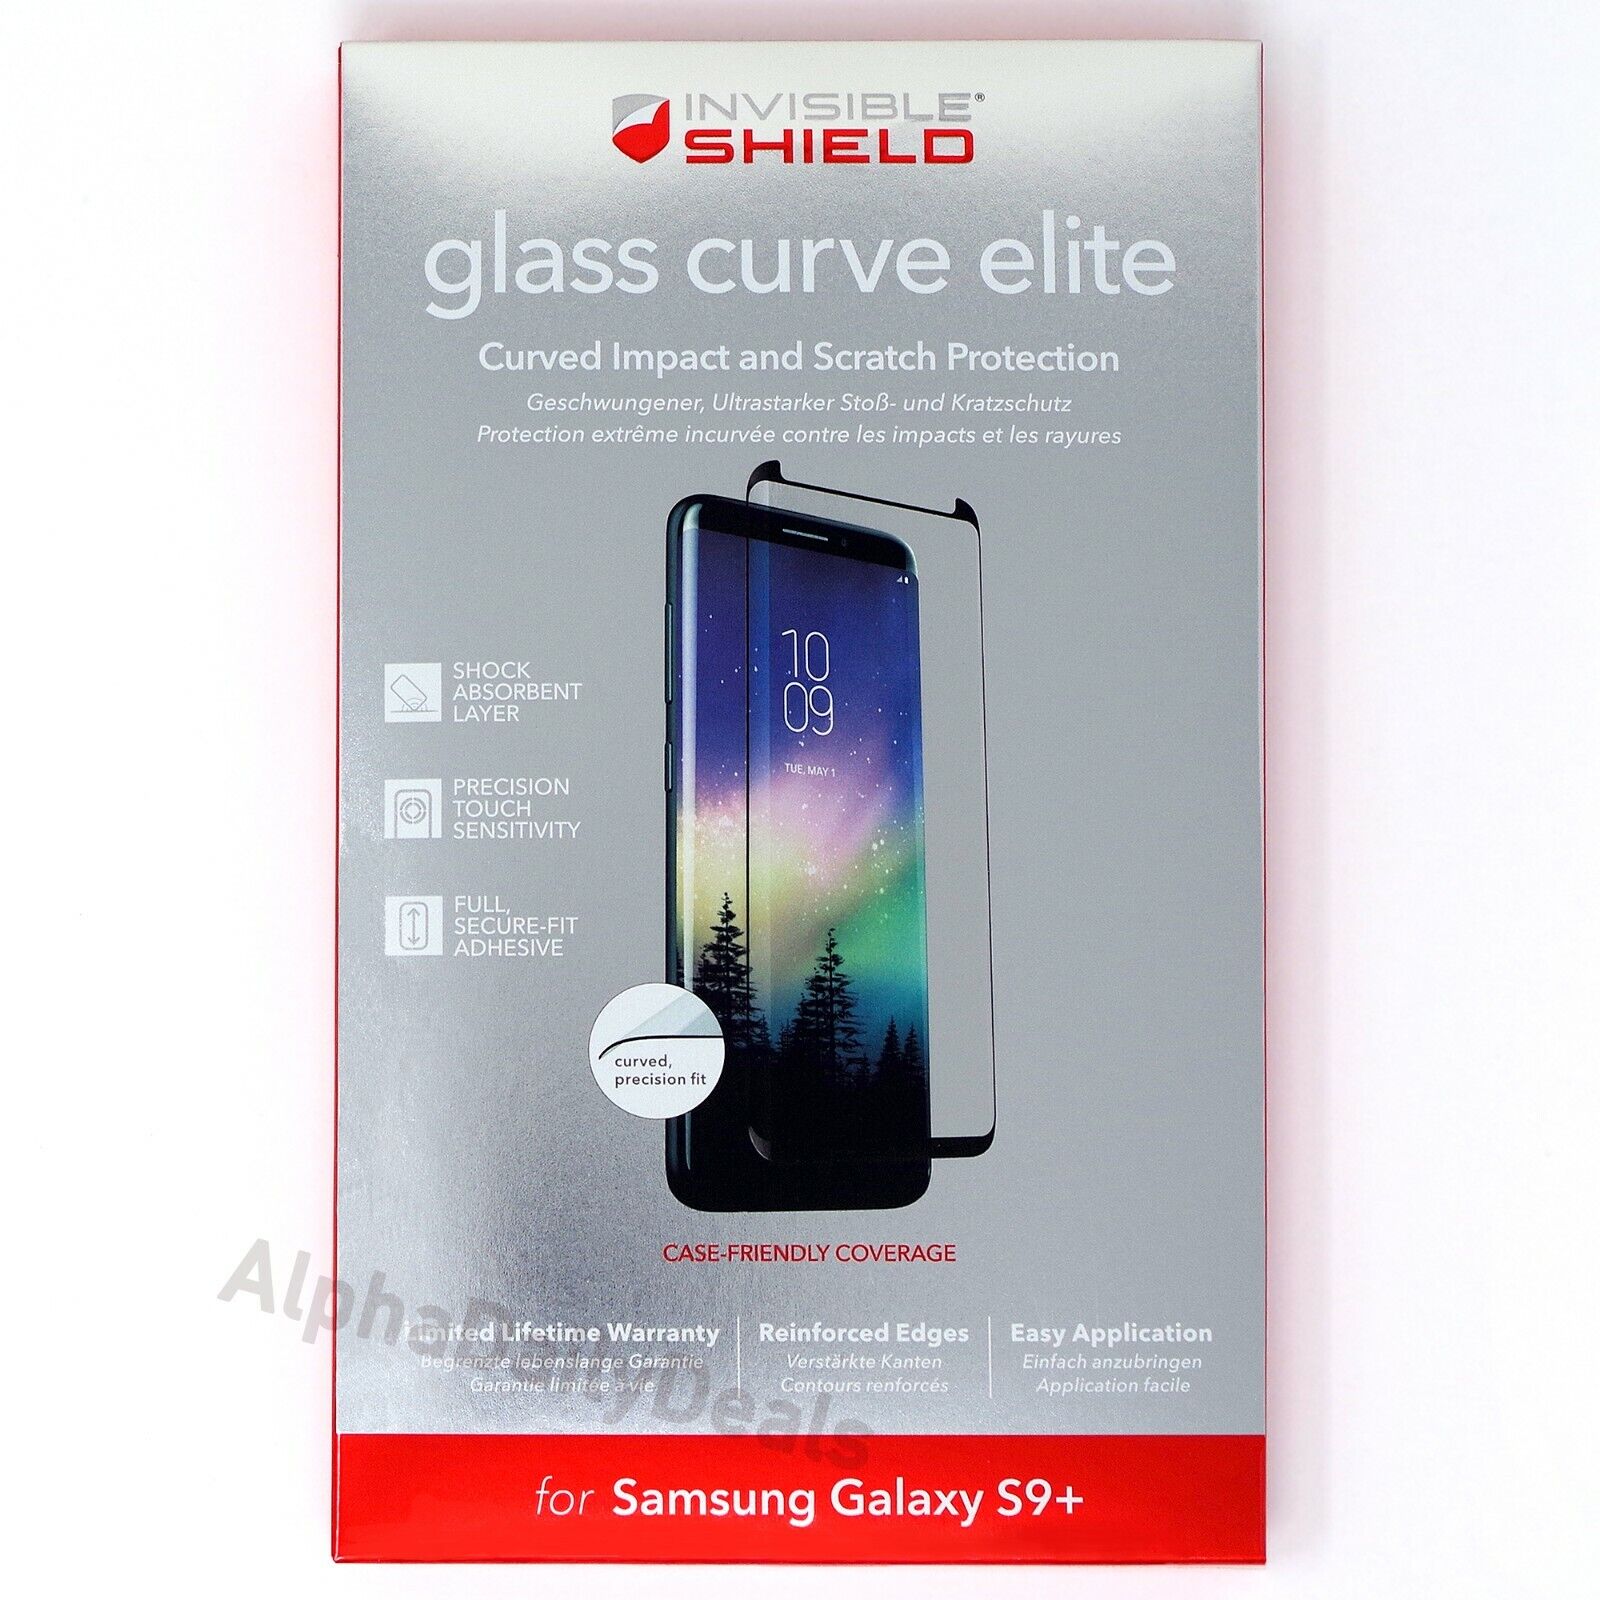 ZAGG InvisibleShield Glass Curve Elite Screen Protector Samsung Galaxy S9+